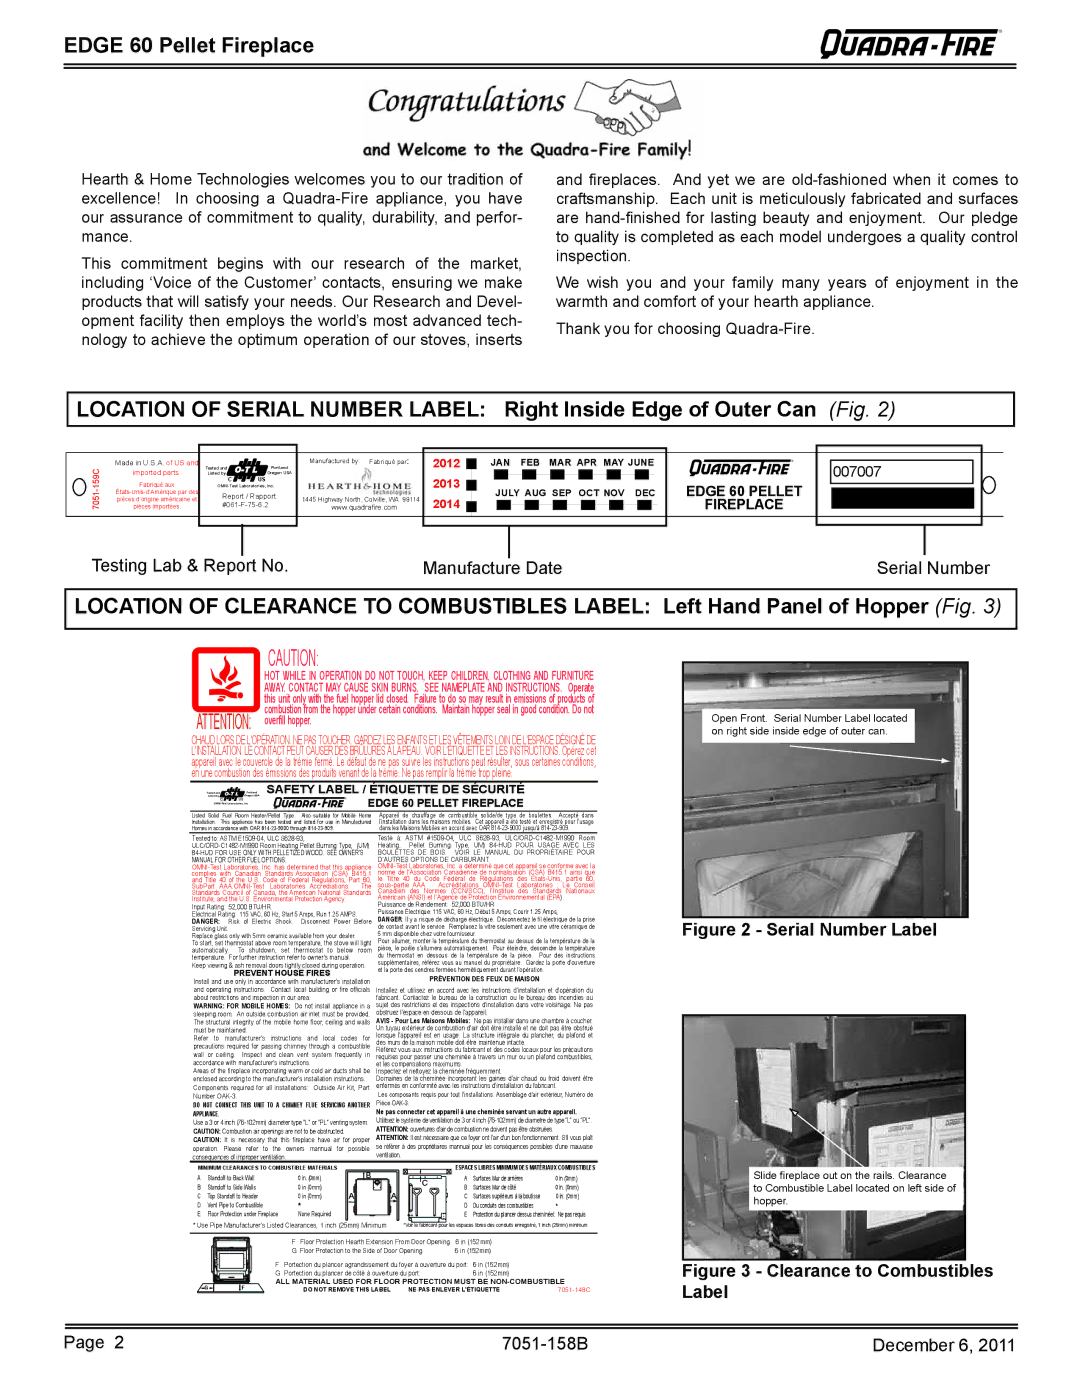 Quadra-Fire 7051-158B owner manual Edge 60 Pellet Fireplace, Serial Number Label 